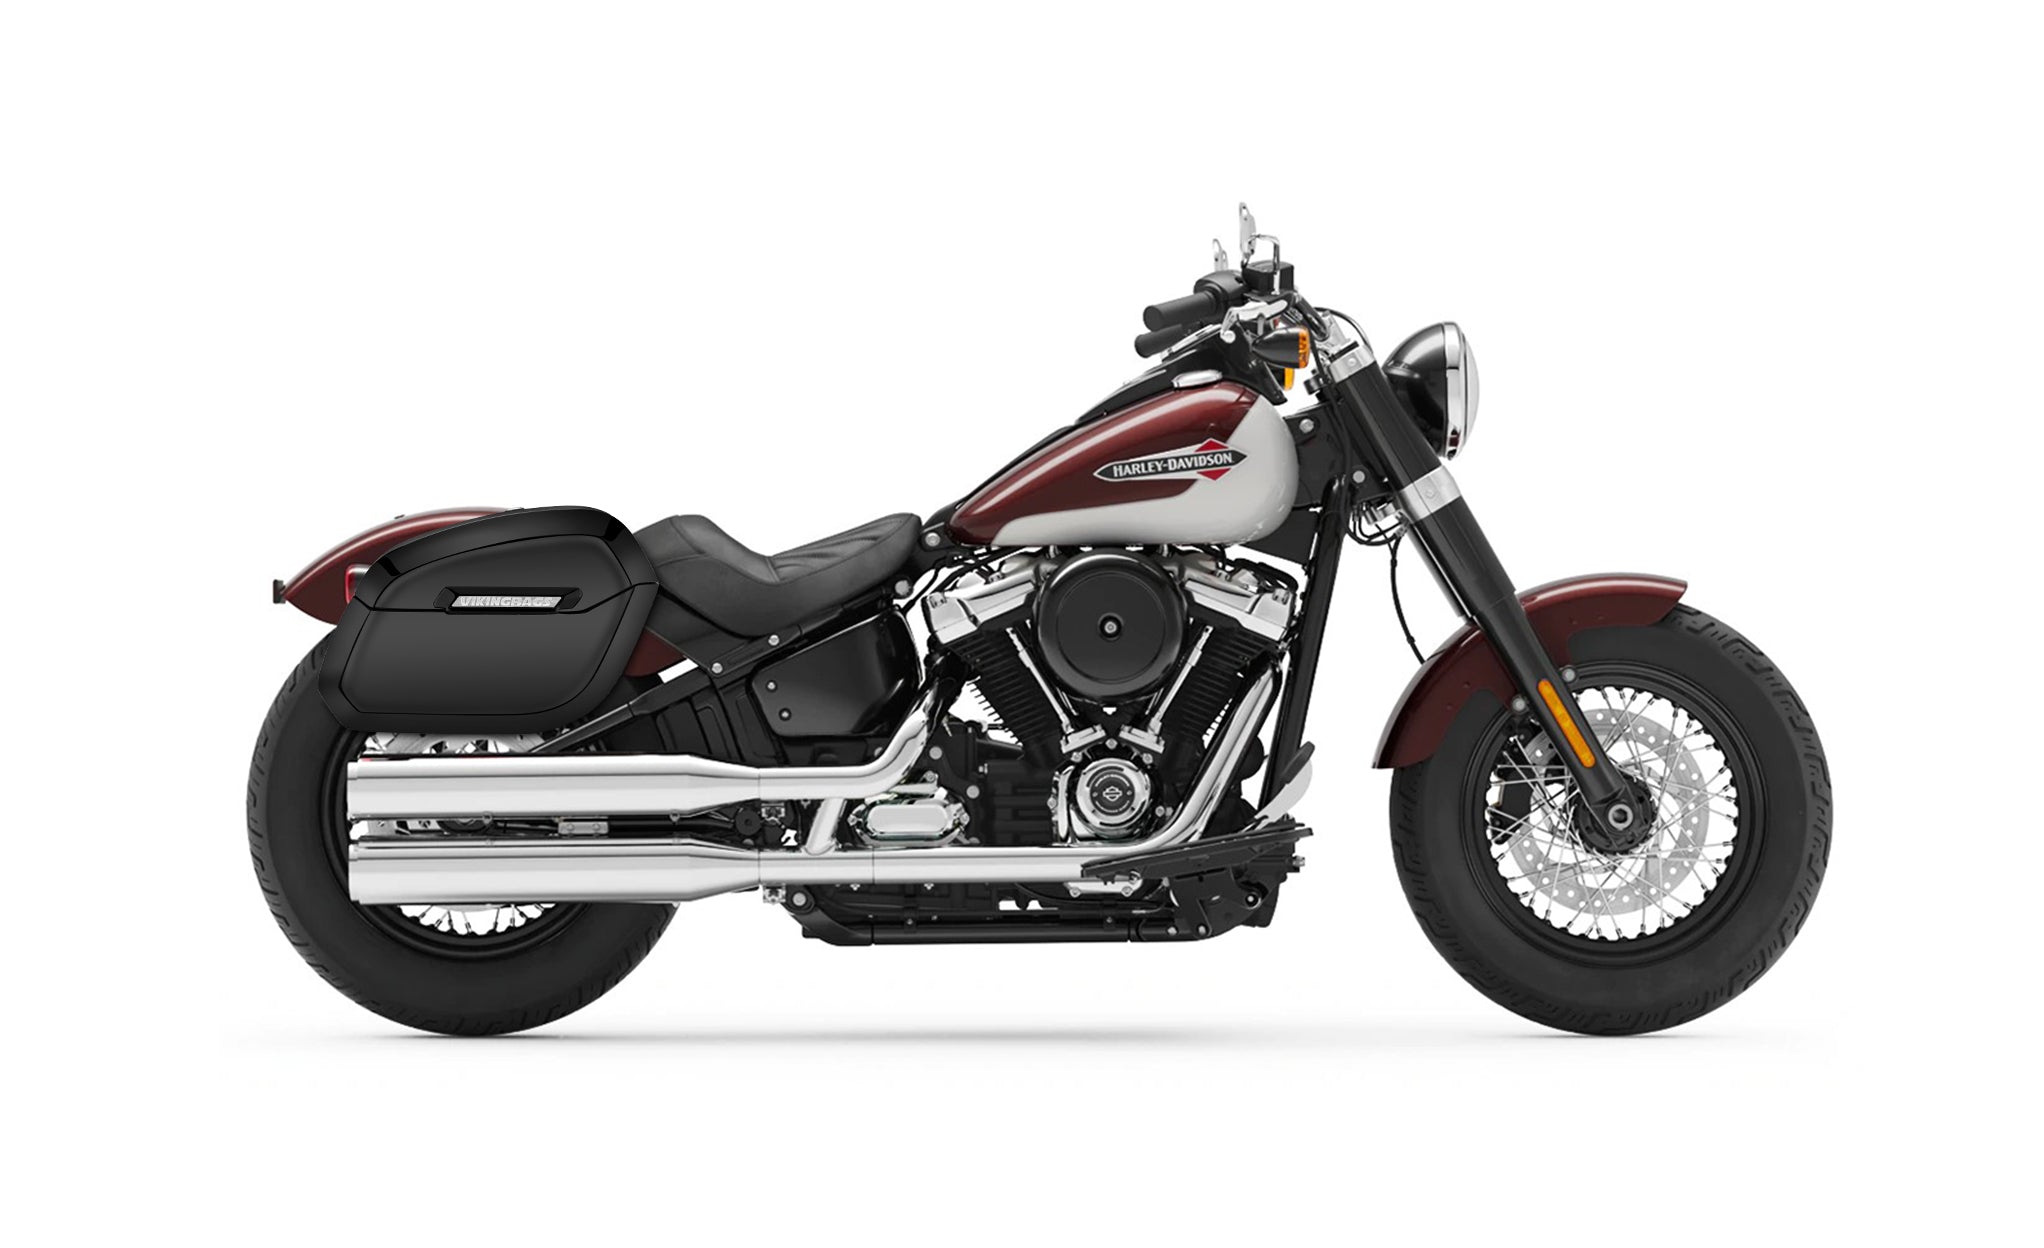 32L - Darkin Large Quick Mount Painted Hard Saddlebags for Harley Softail Slim FLS on Bike Photo @expand